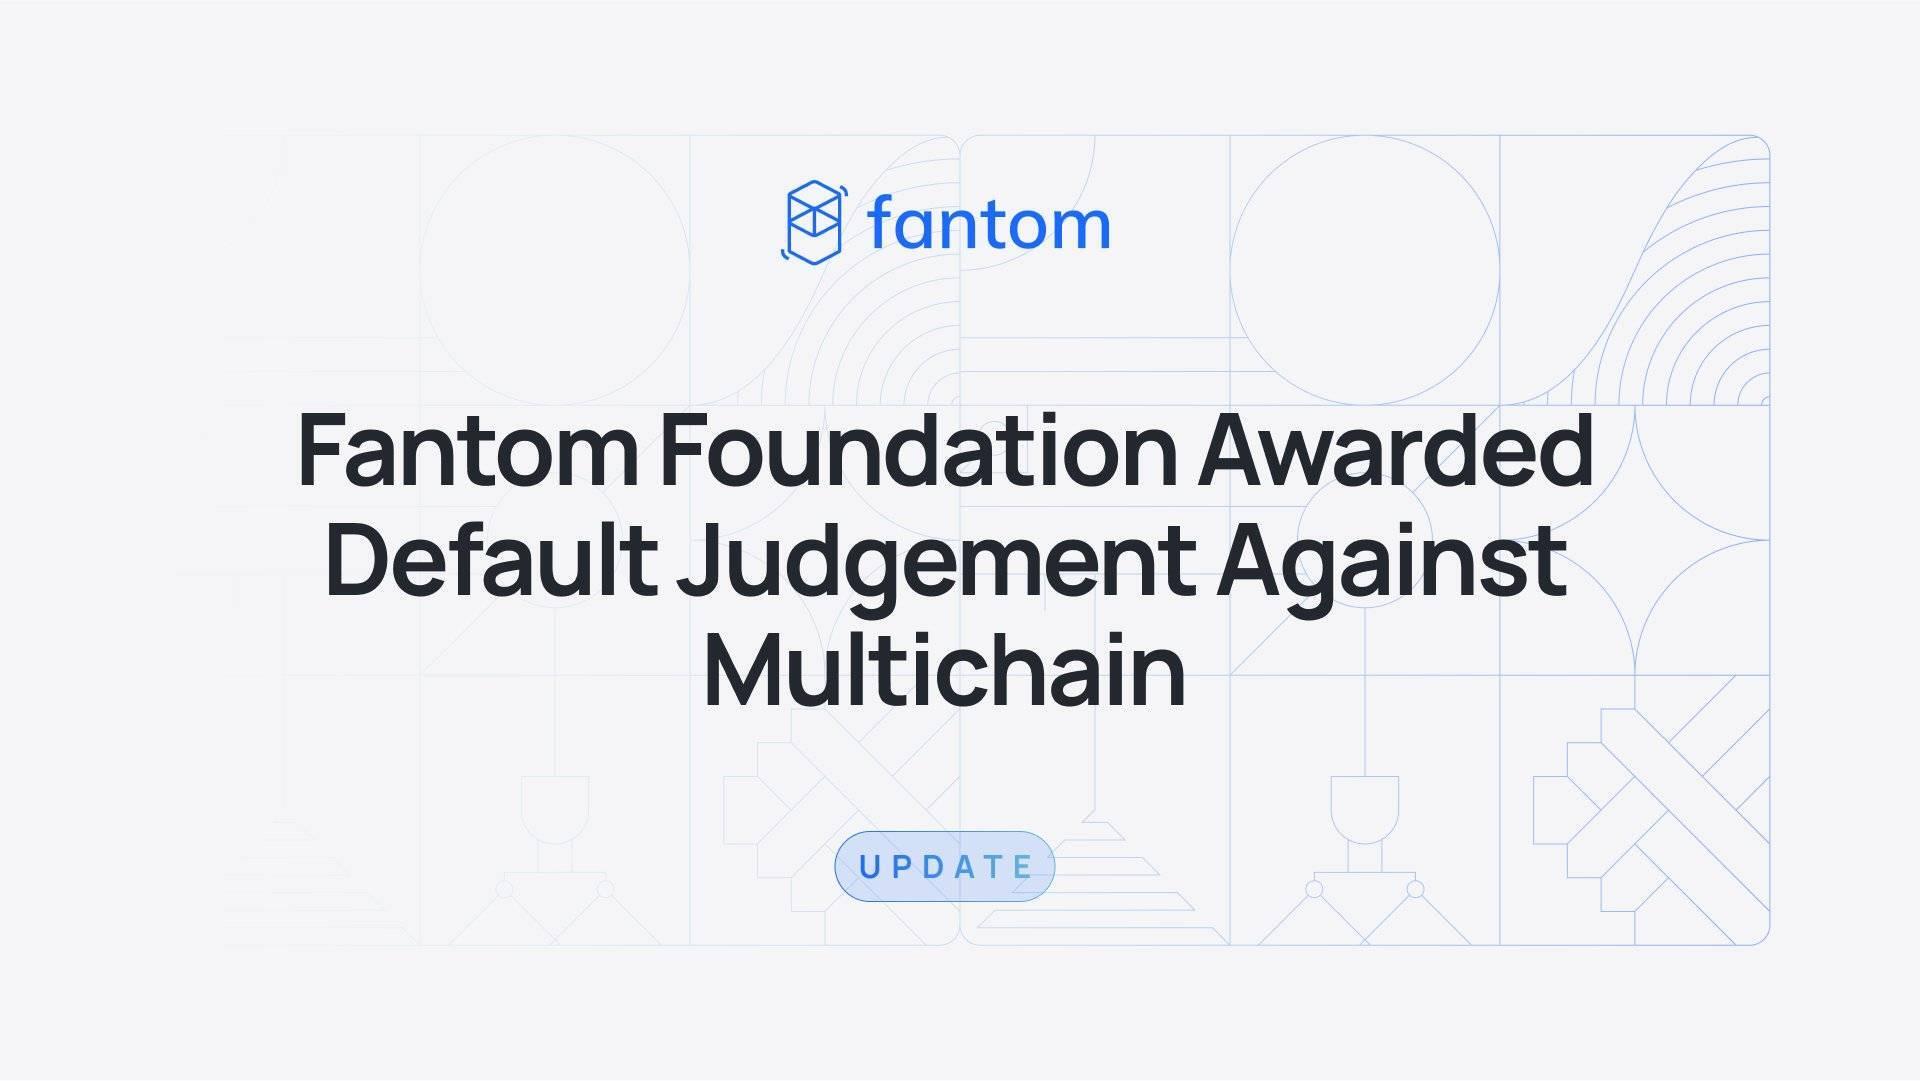 fantom-foundation-kien-nghi-multichain-boi-thuong-65-trieu-usd